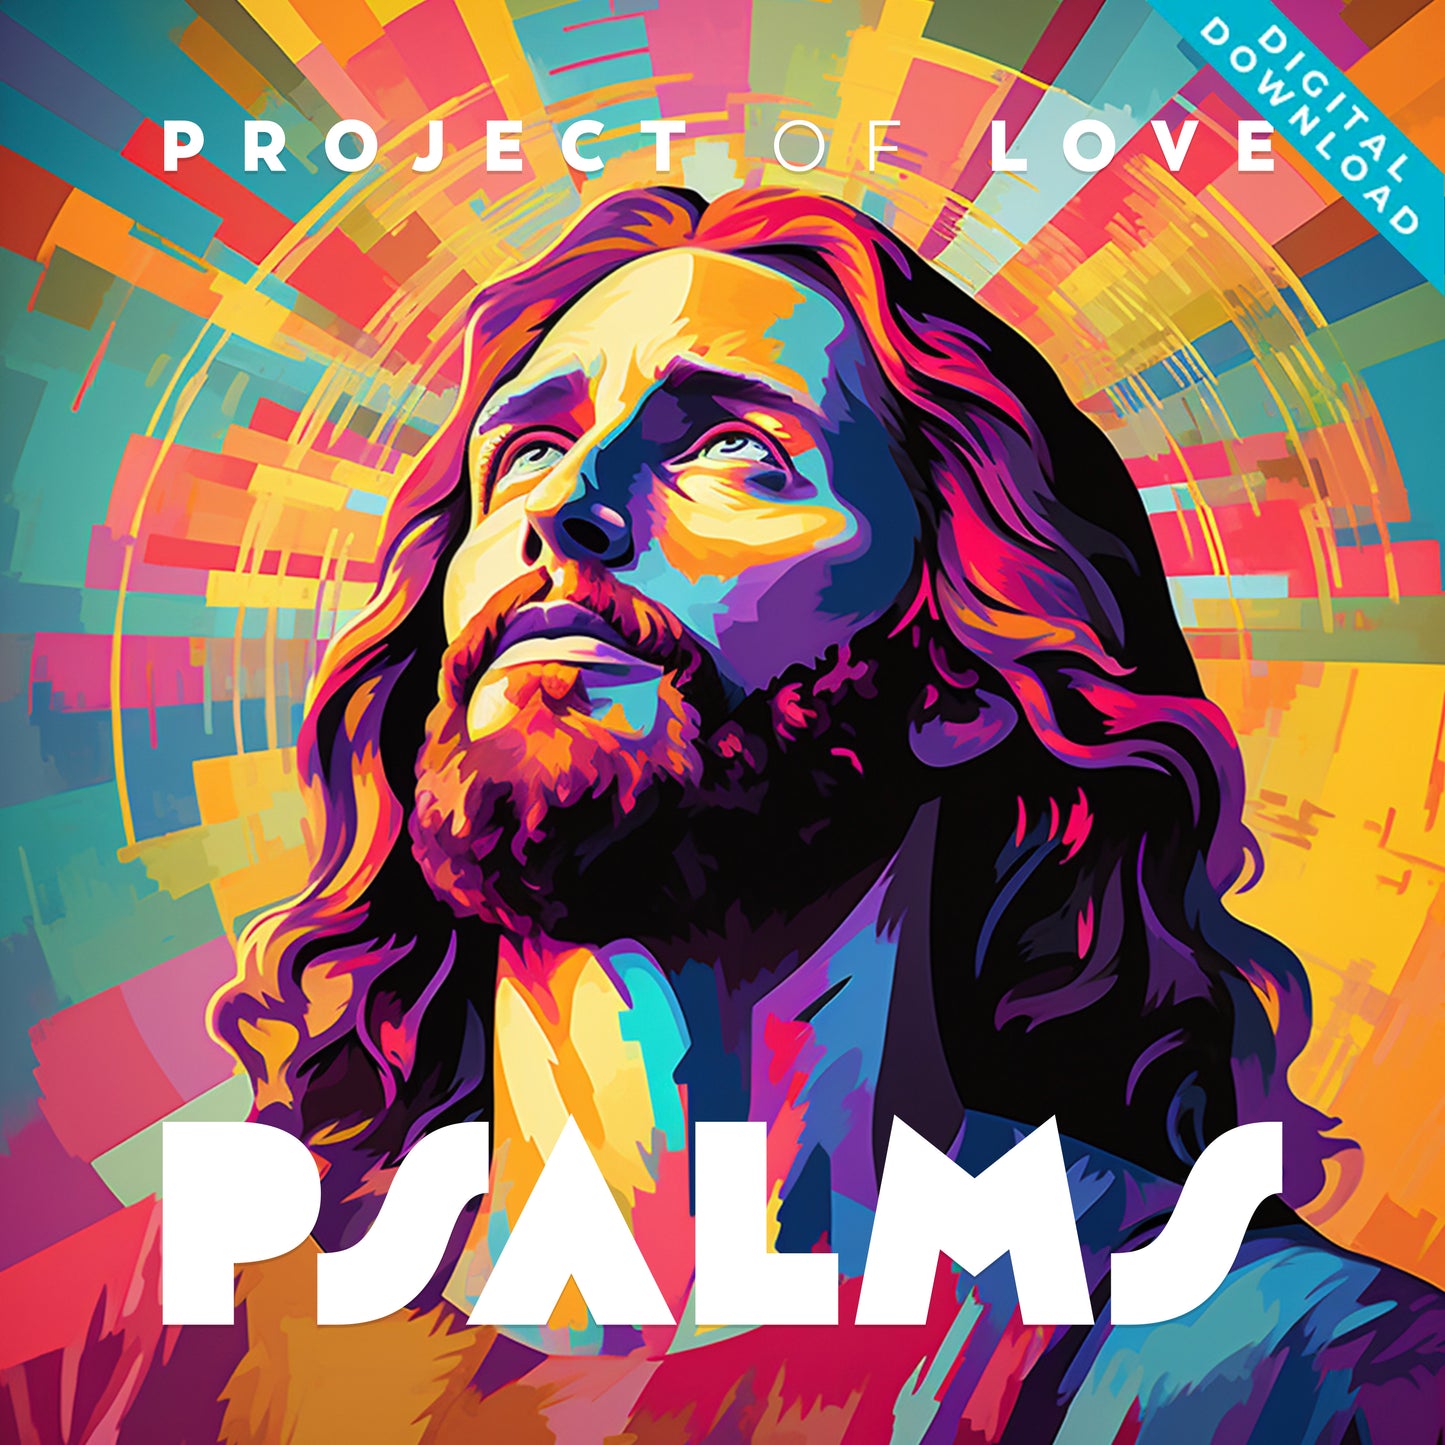 Digital album 'Psalms' - Download 19 Psalms in song